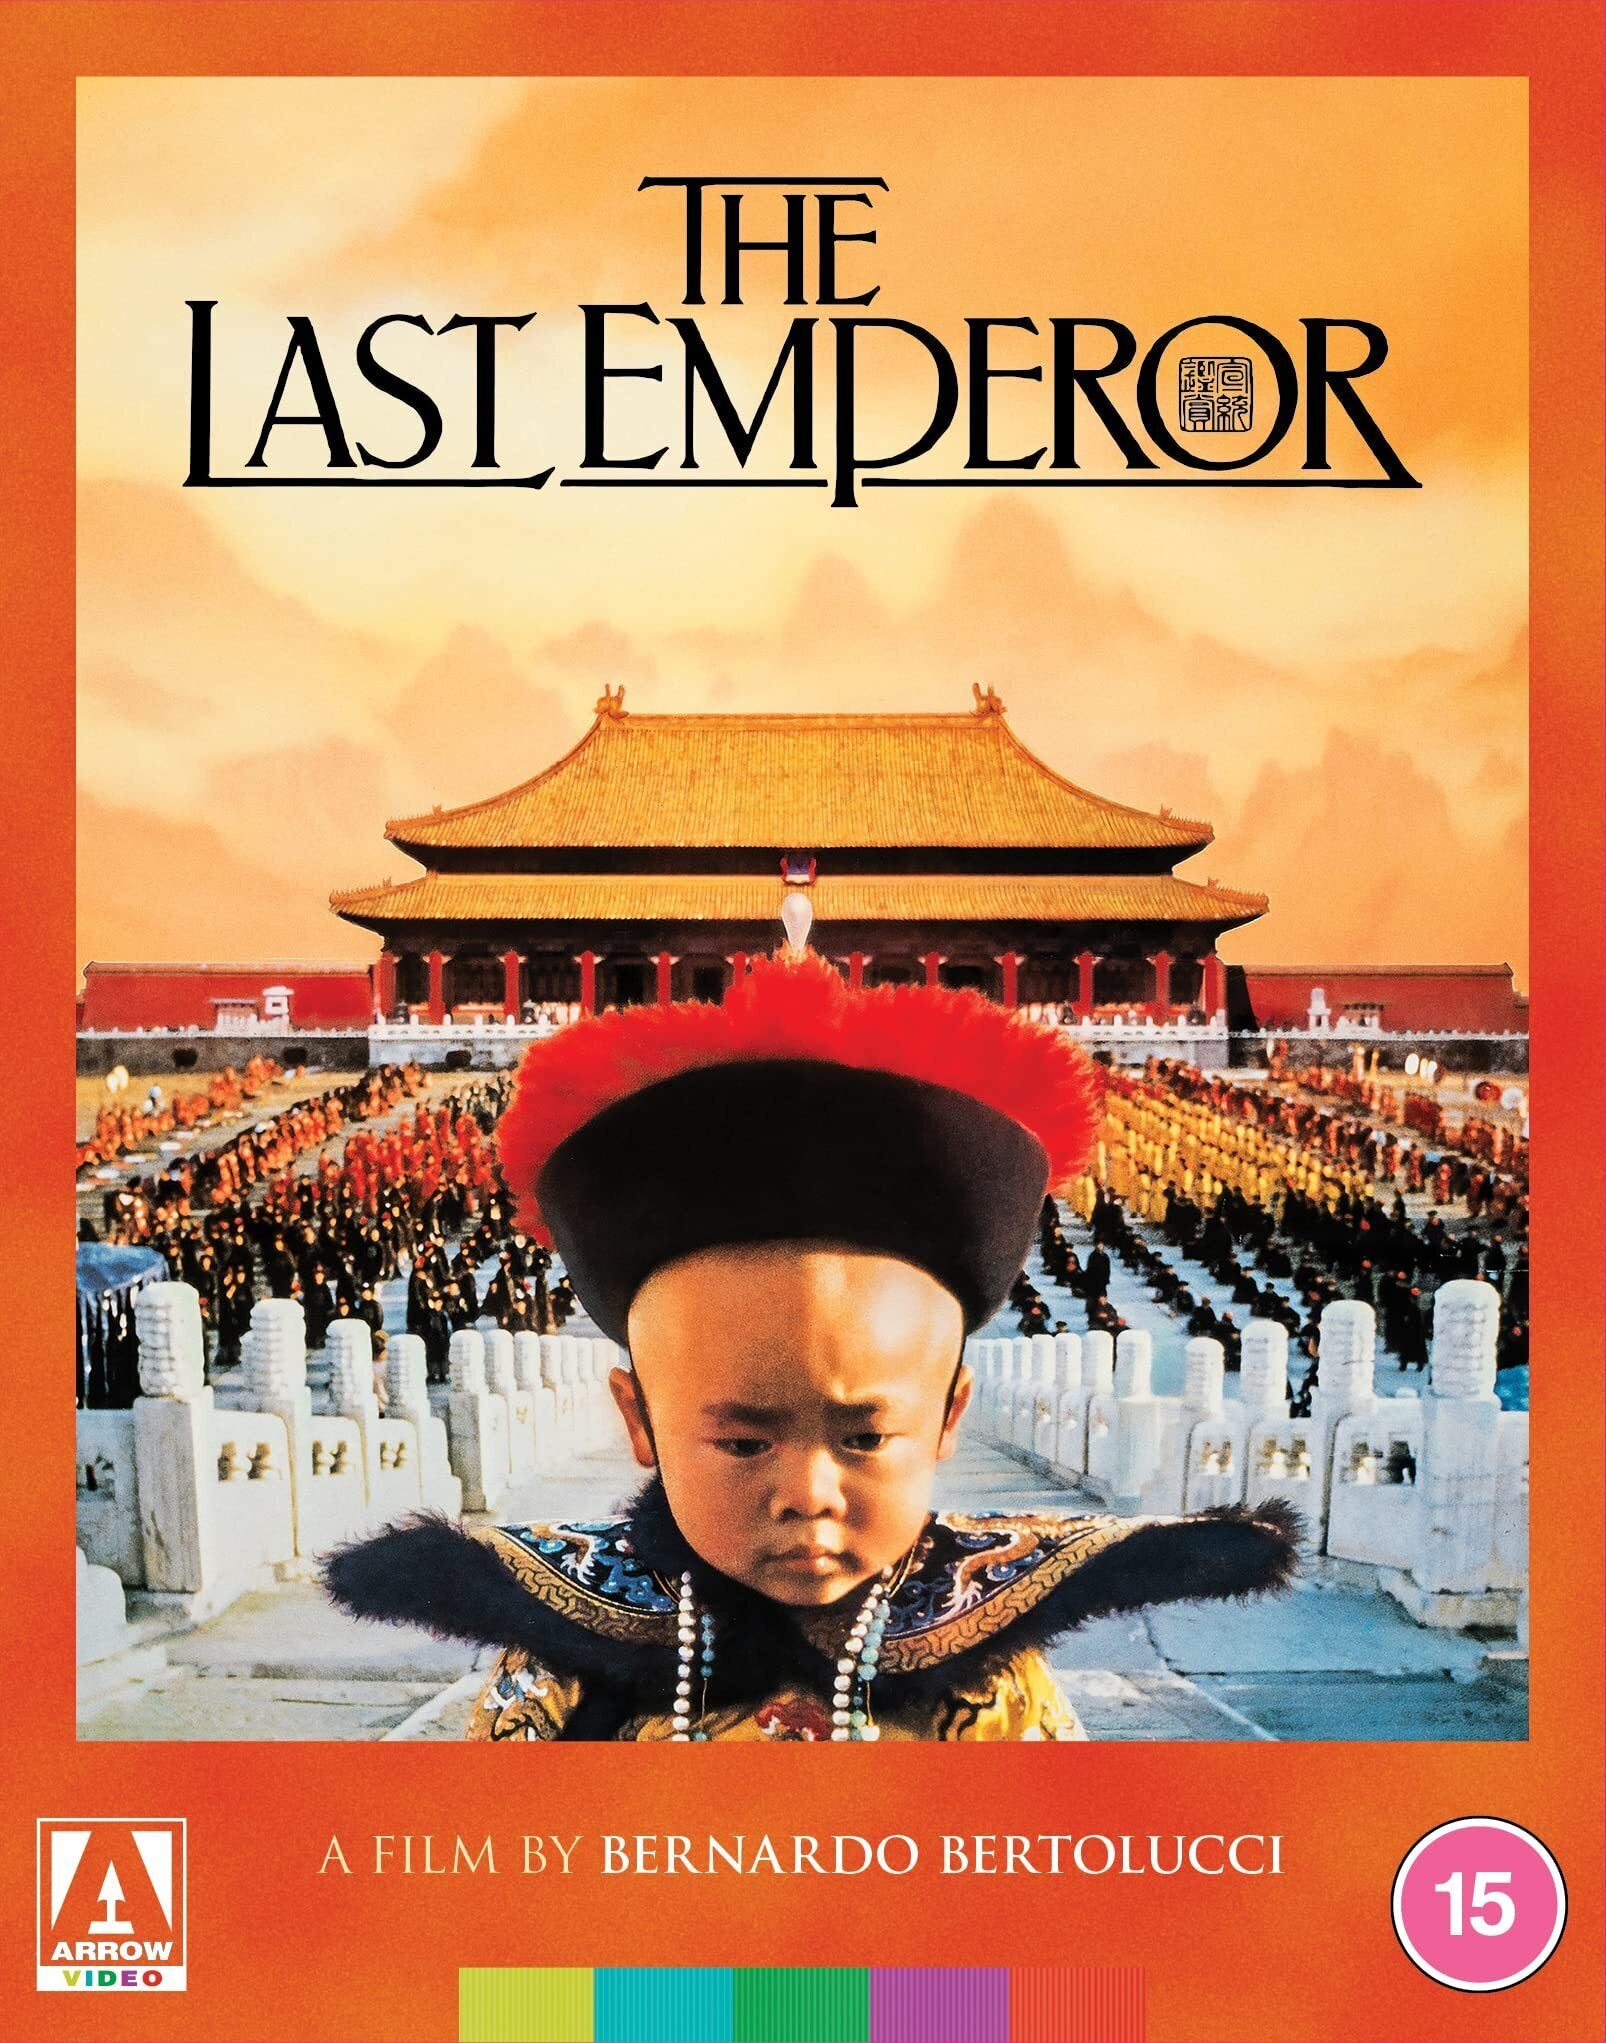 THE LAST EMPEROR (REGION B IMPORT - LIMITED EDITION) BLU-RAY